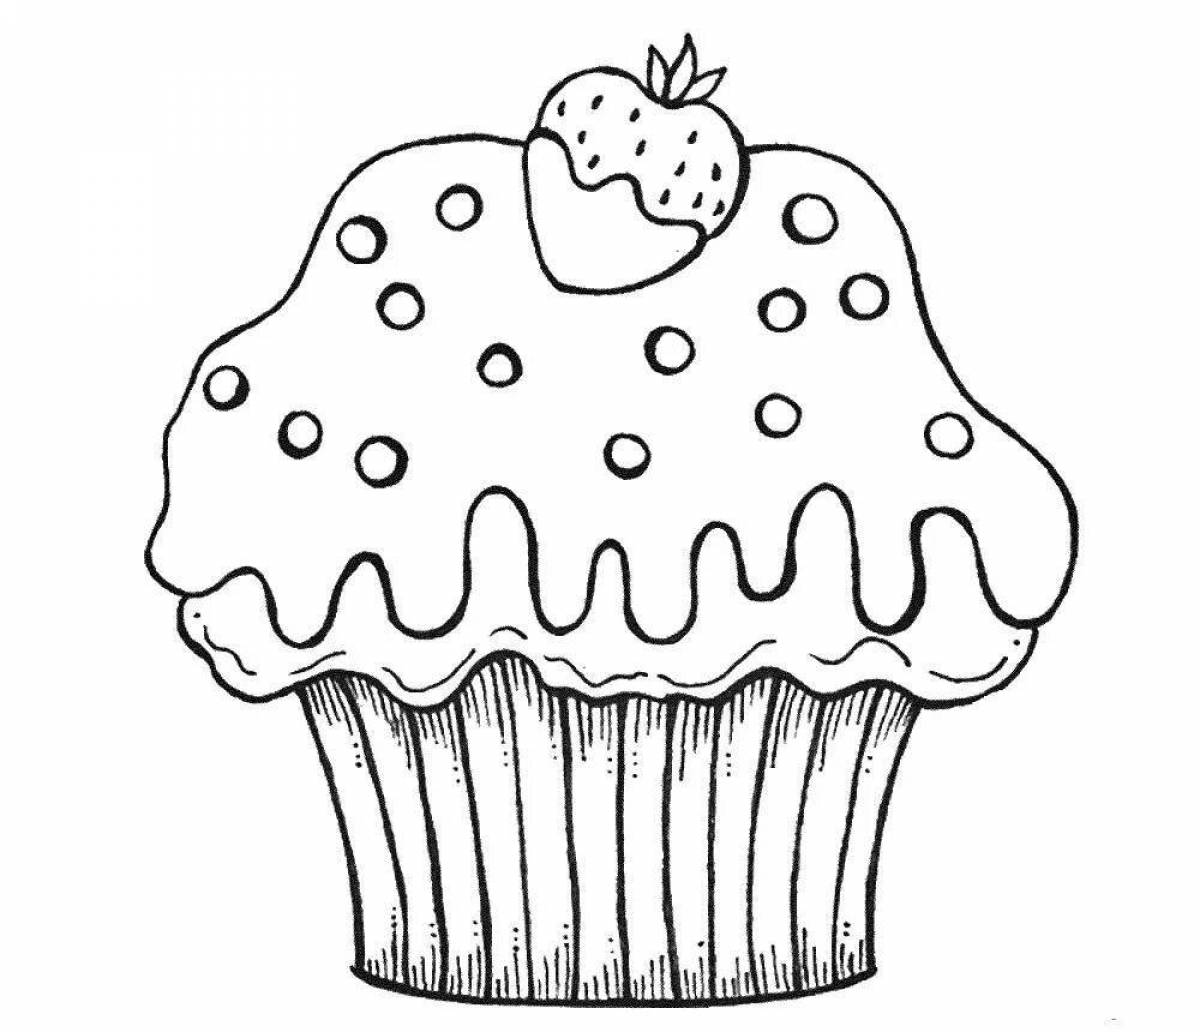 Decorative cupcake coloring page